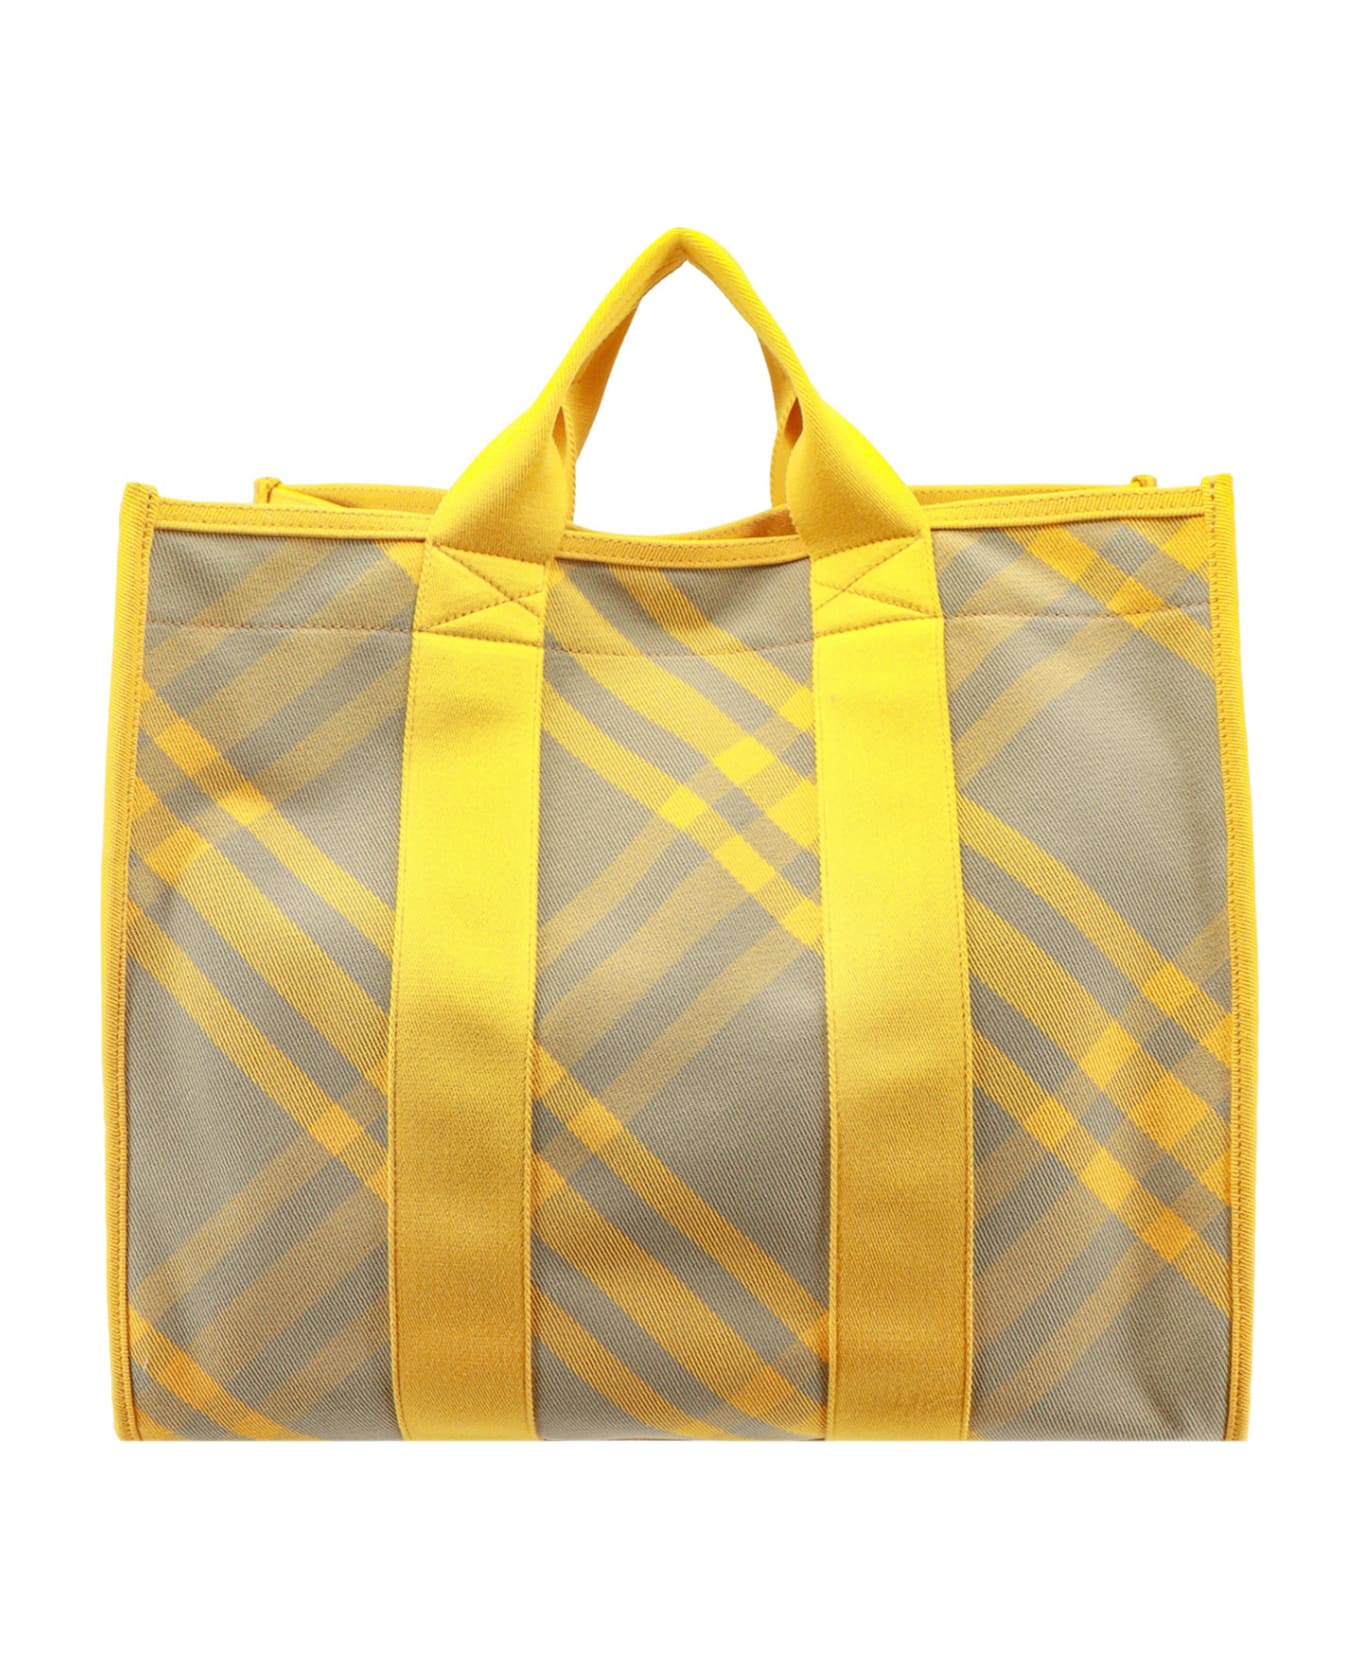 Burberry Shoulder Bag - Yellow